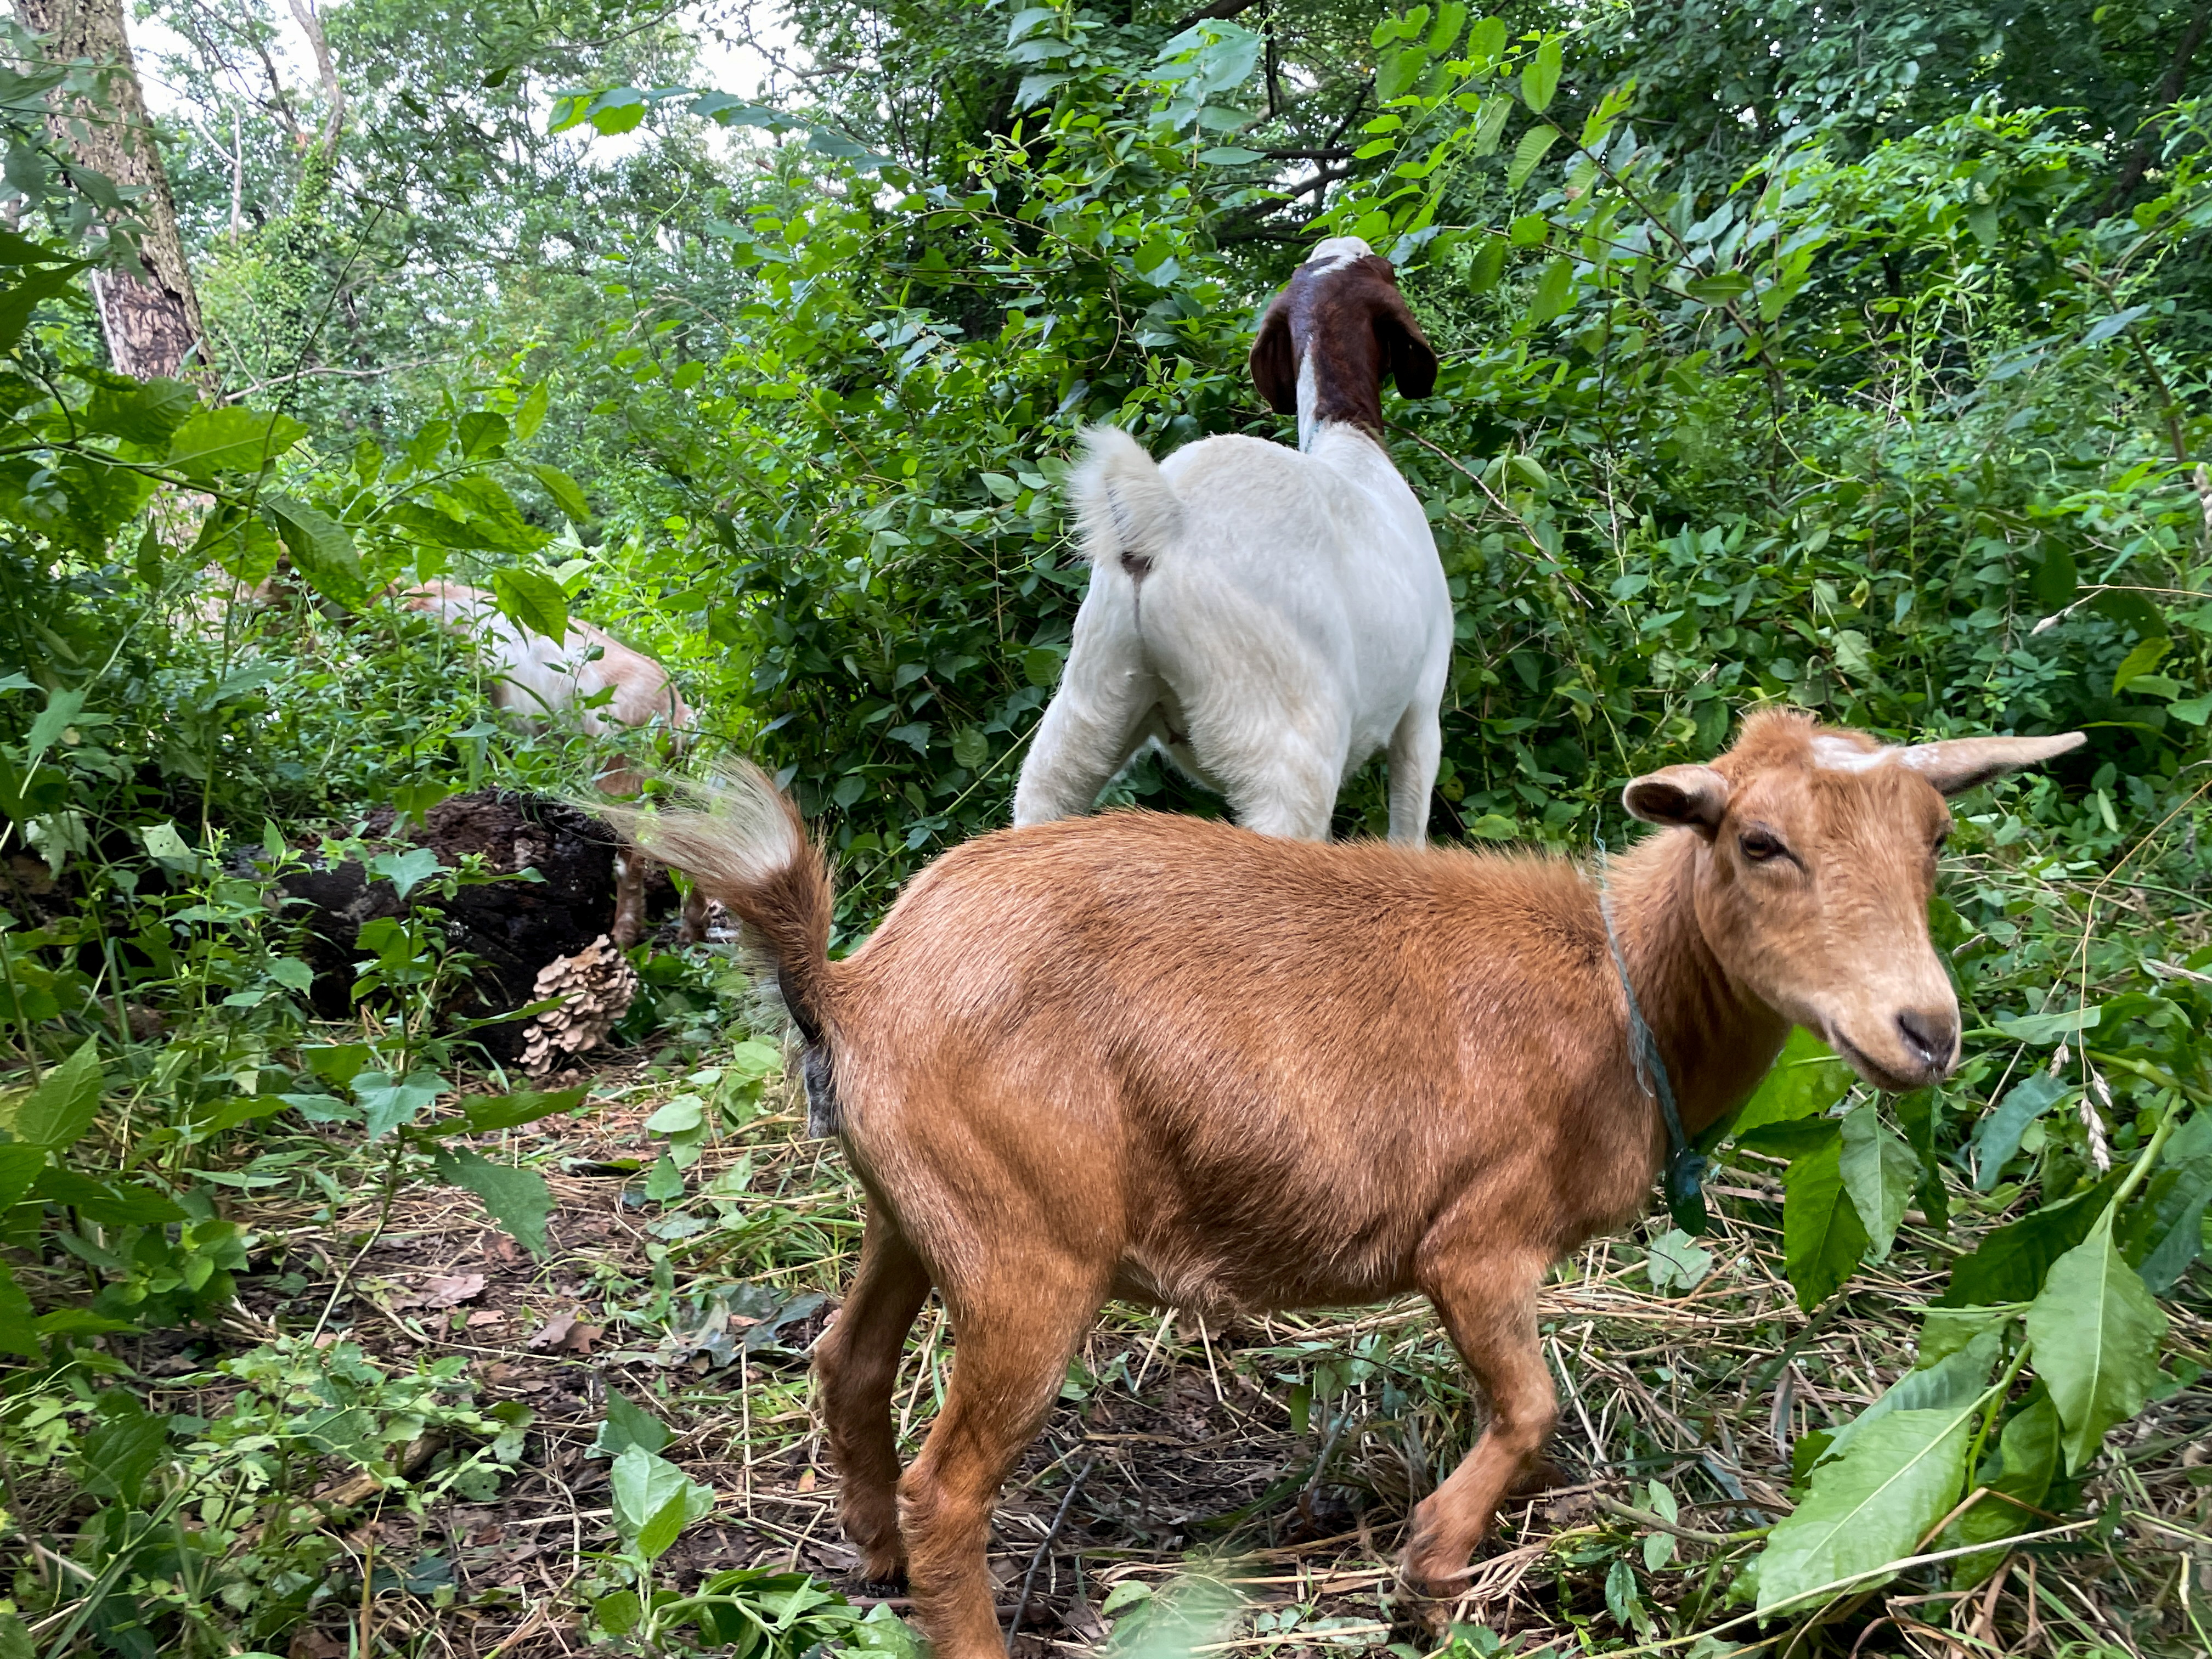 Two dozen goats eat their way through Riverside Park in New York City